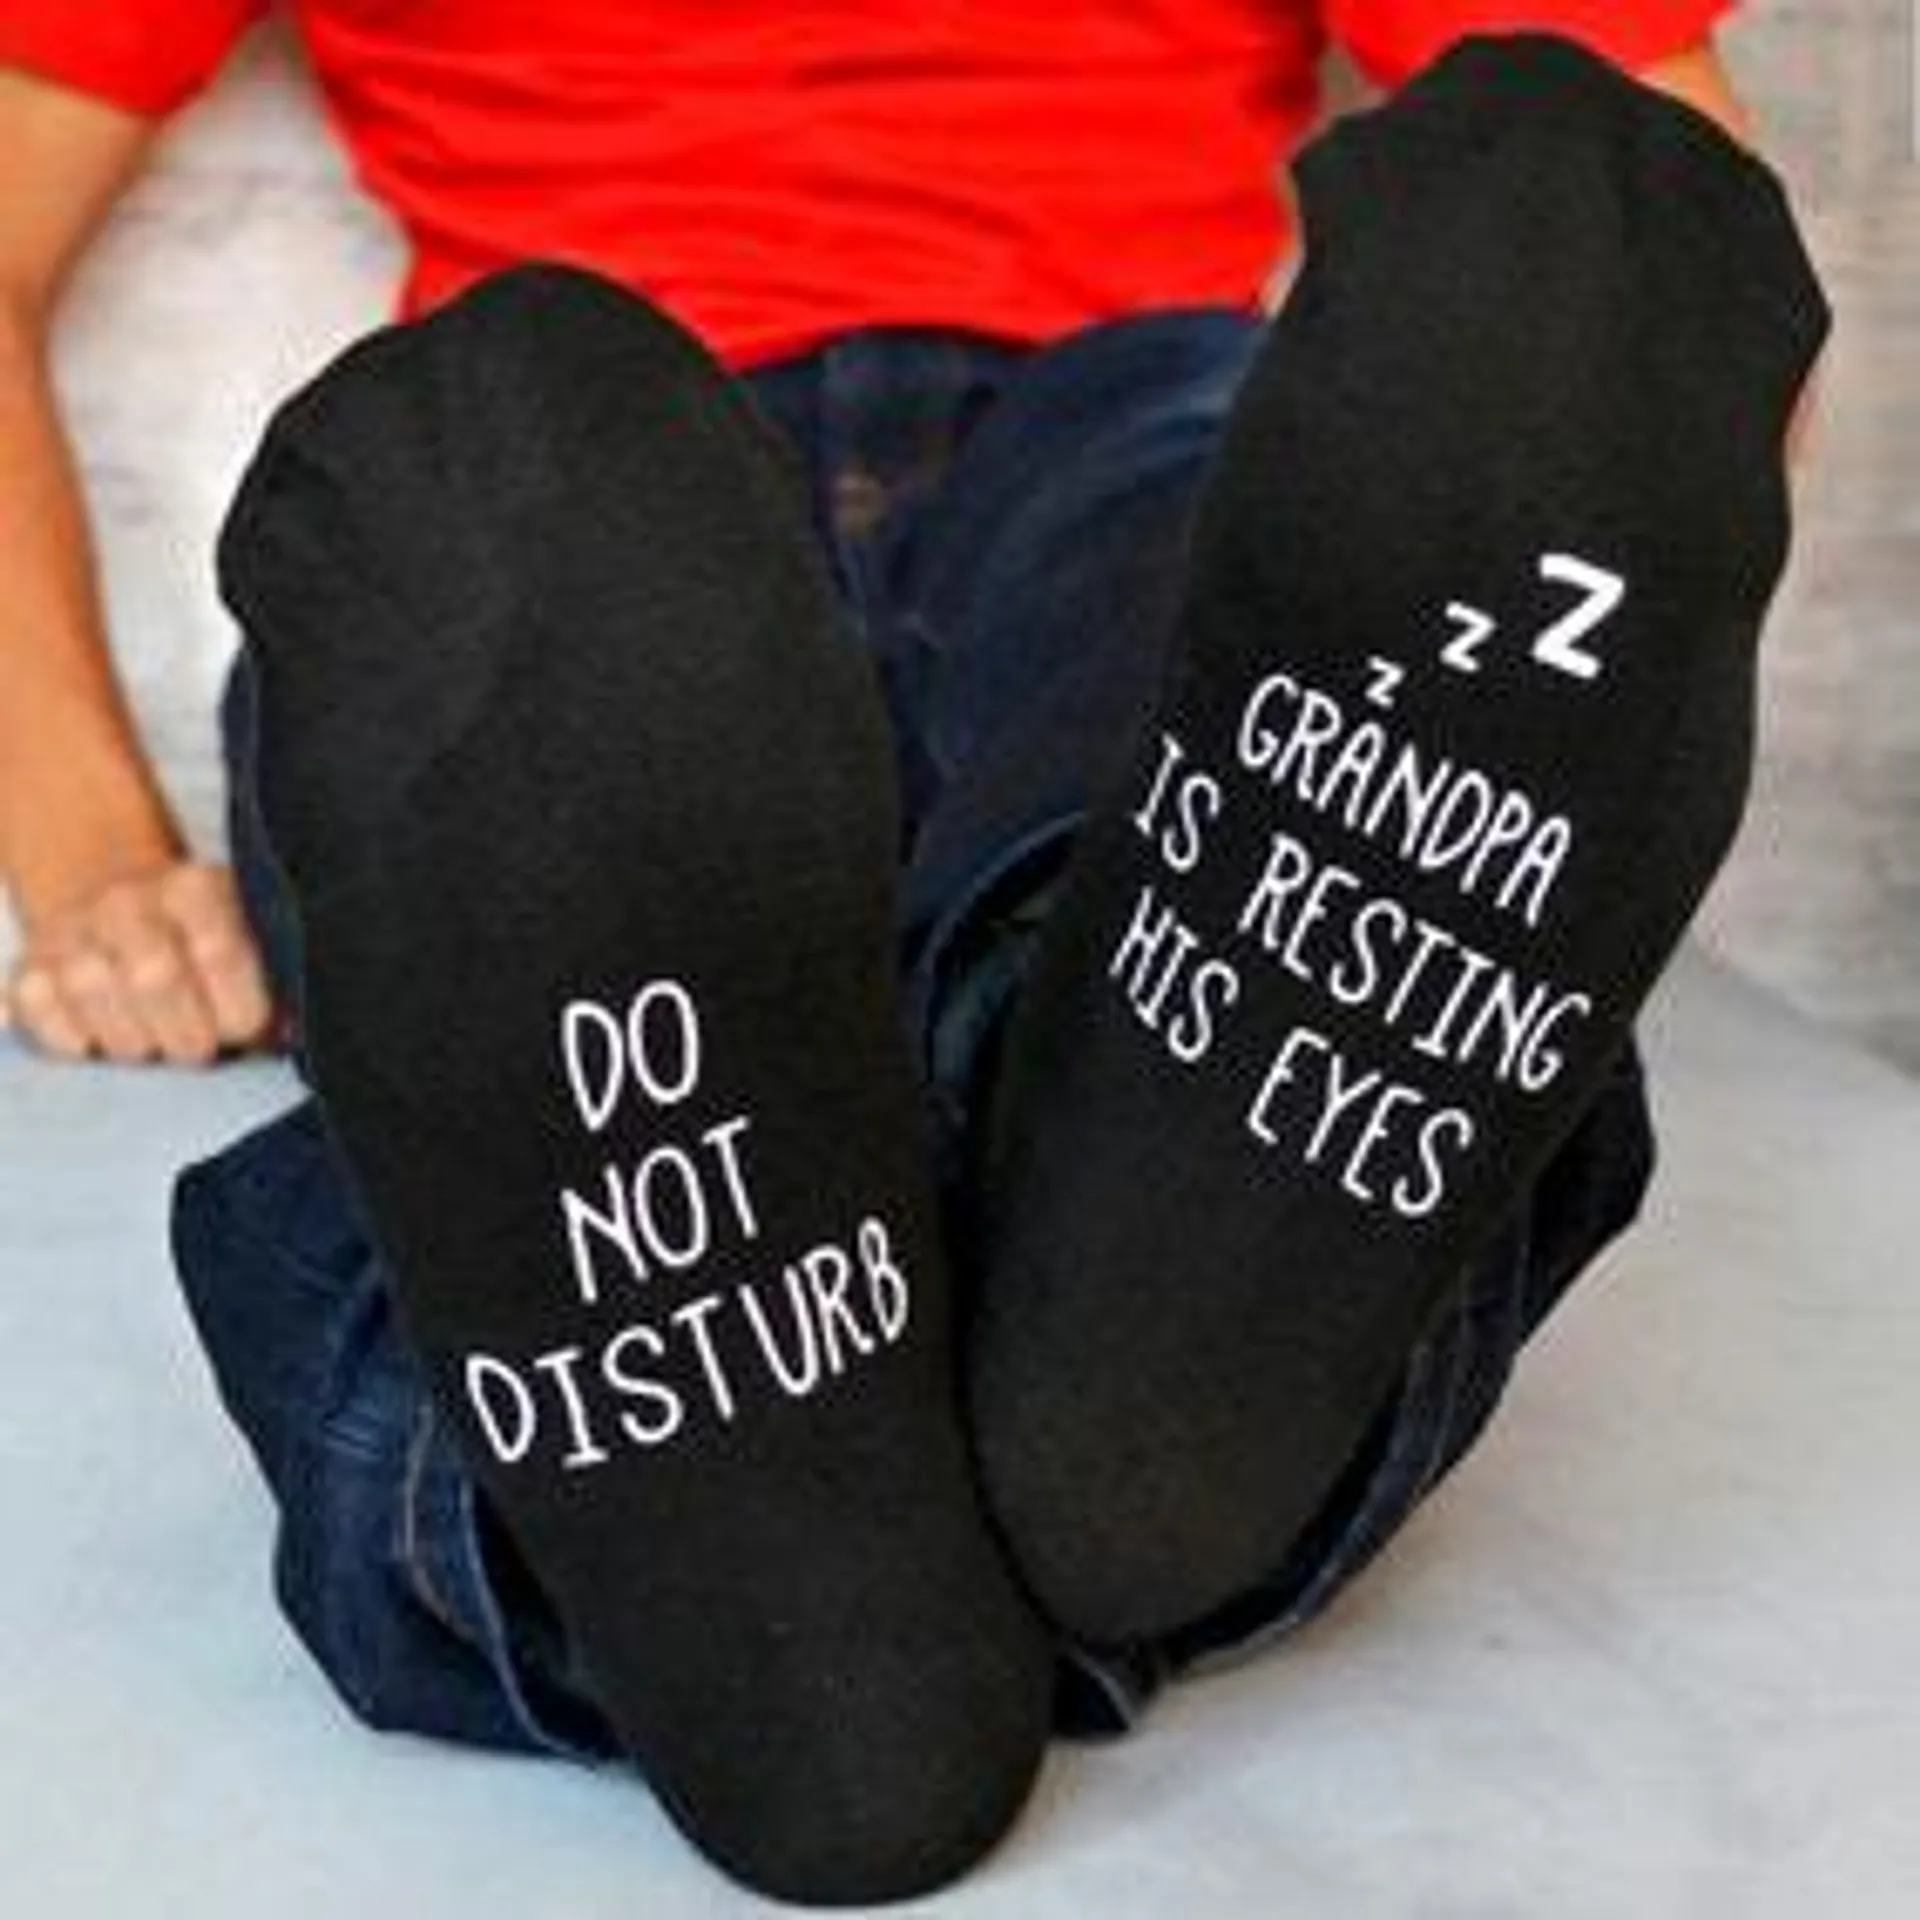 Do Not Disturb Grandad is Resting Eyes Novelty Socks